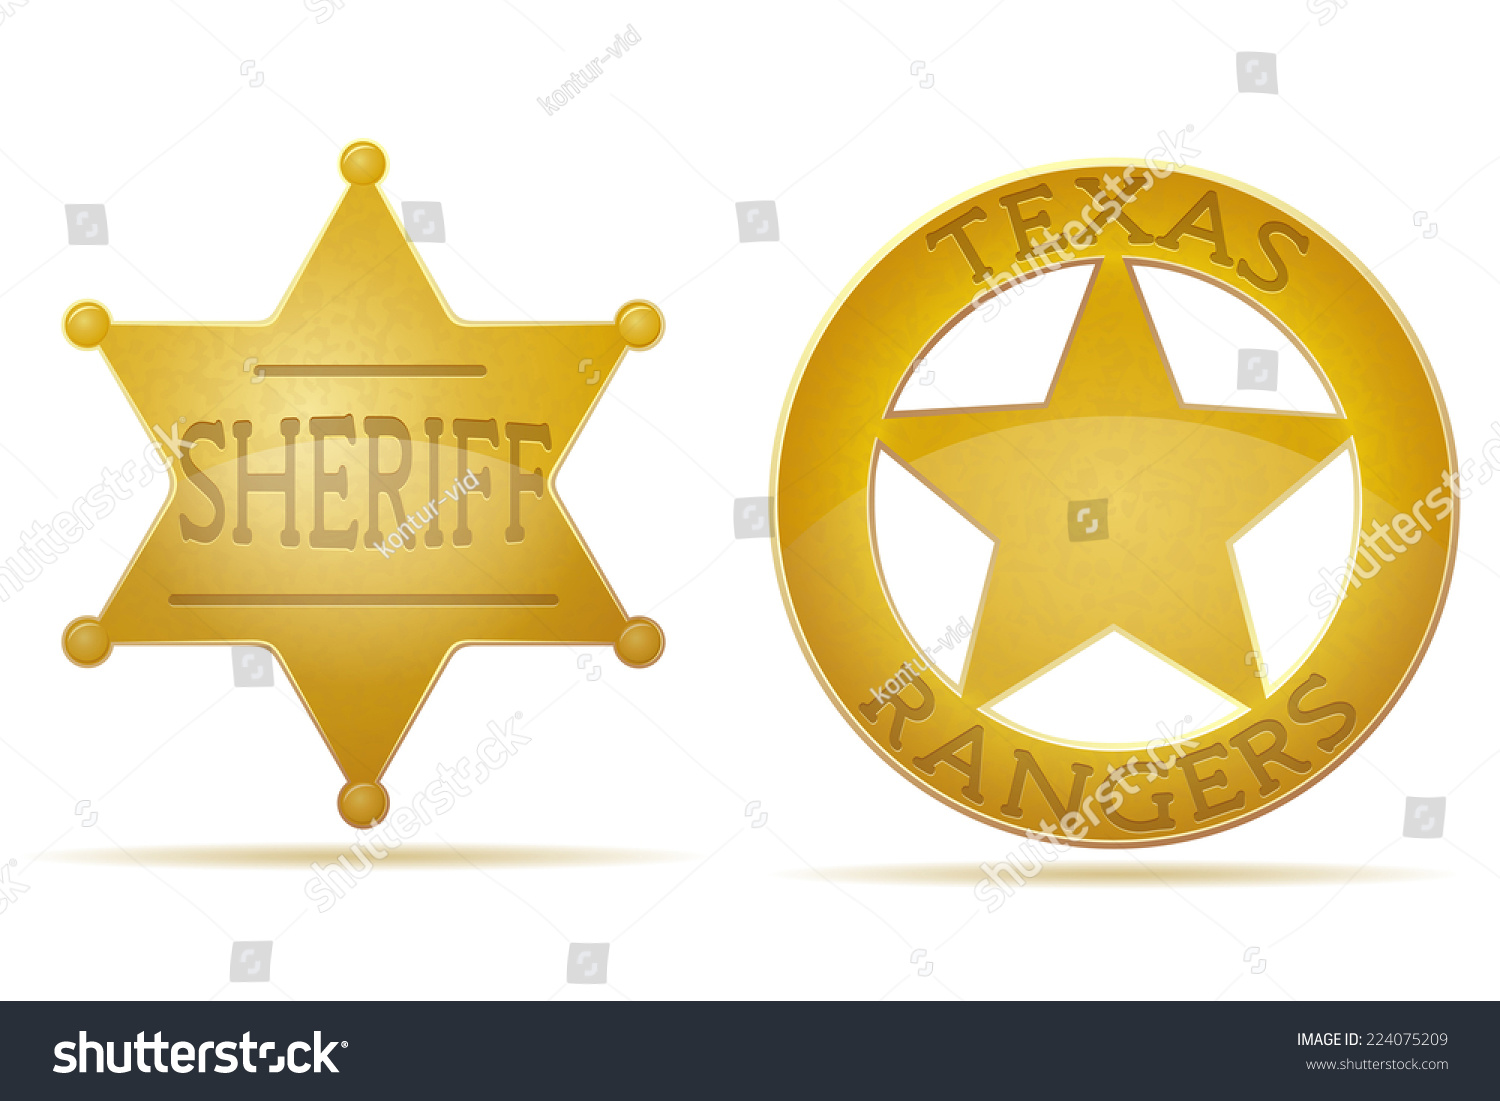 SVG of star sheriff and ranger vector illustration isolated on white background svg